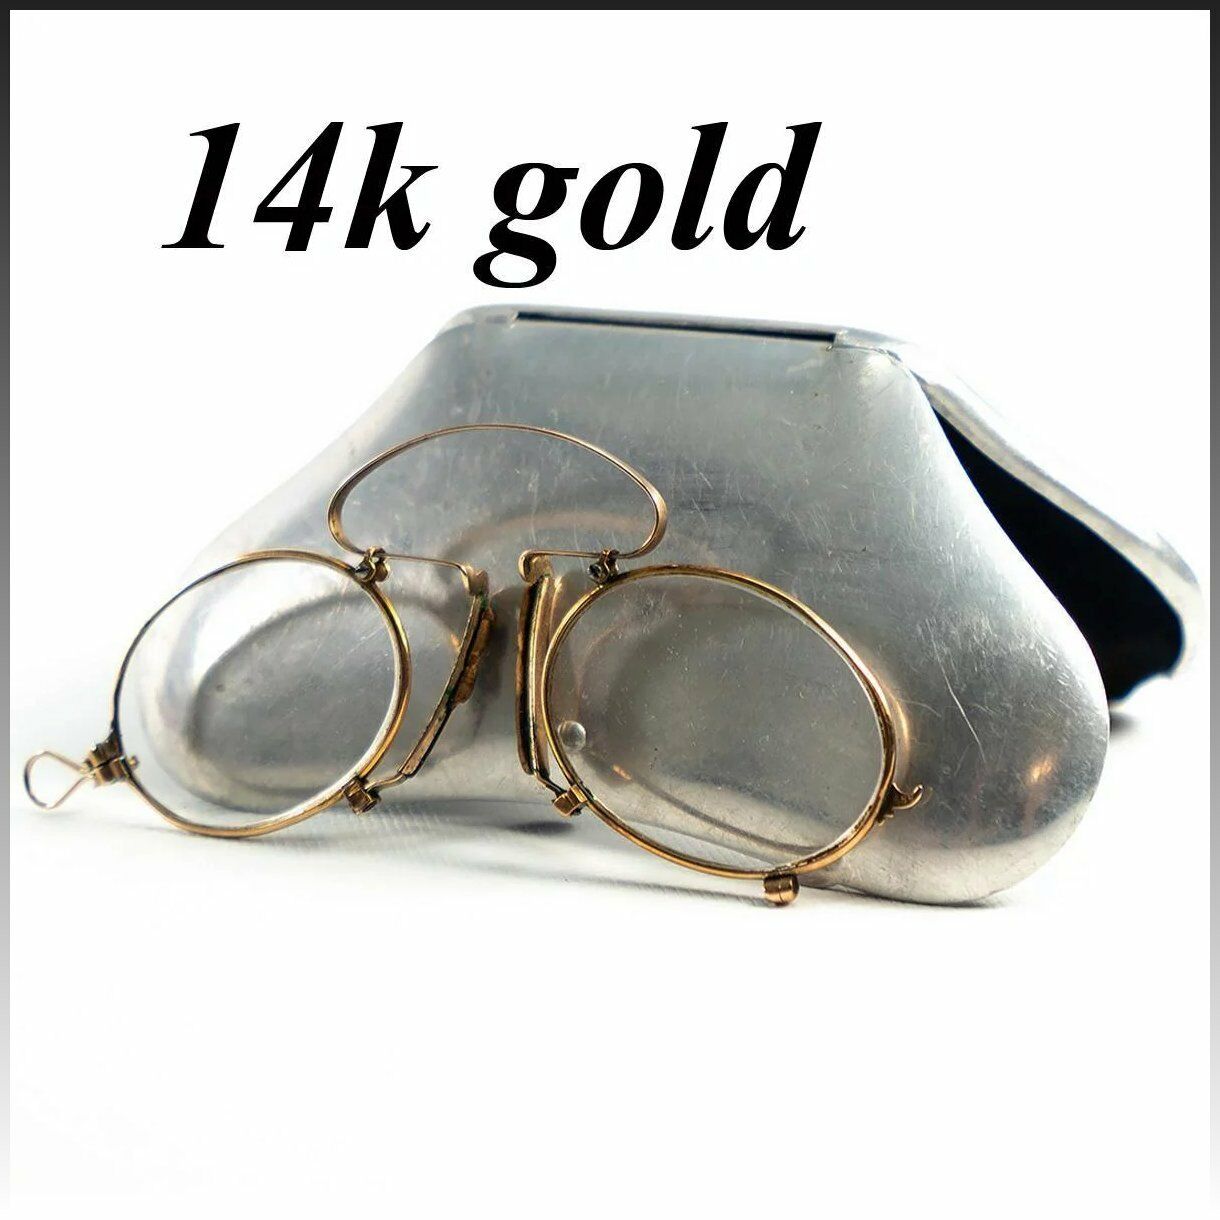 Antique 14K Gold Folding Spectacles, Pince Nez Reading Glasses and Aluminum Case